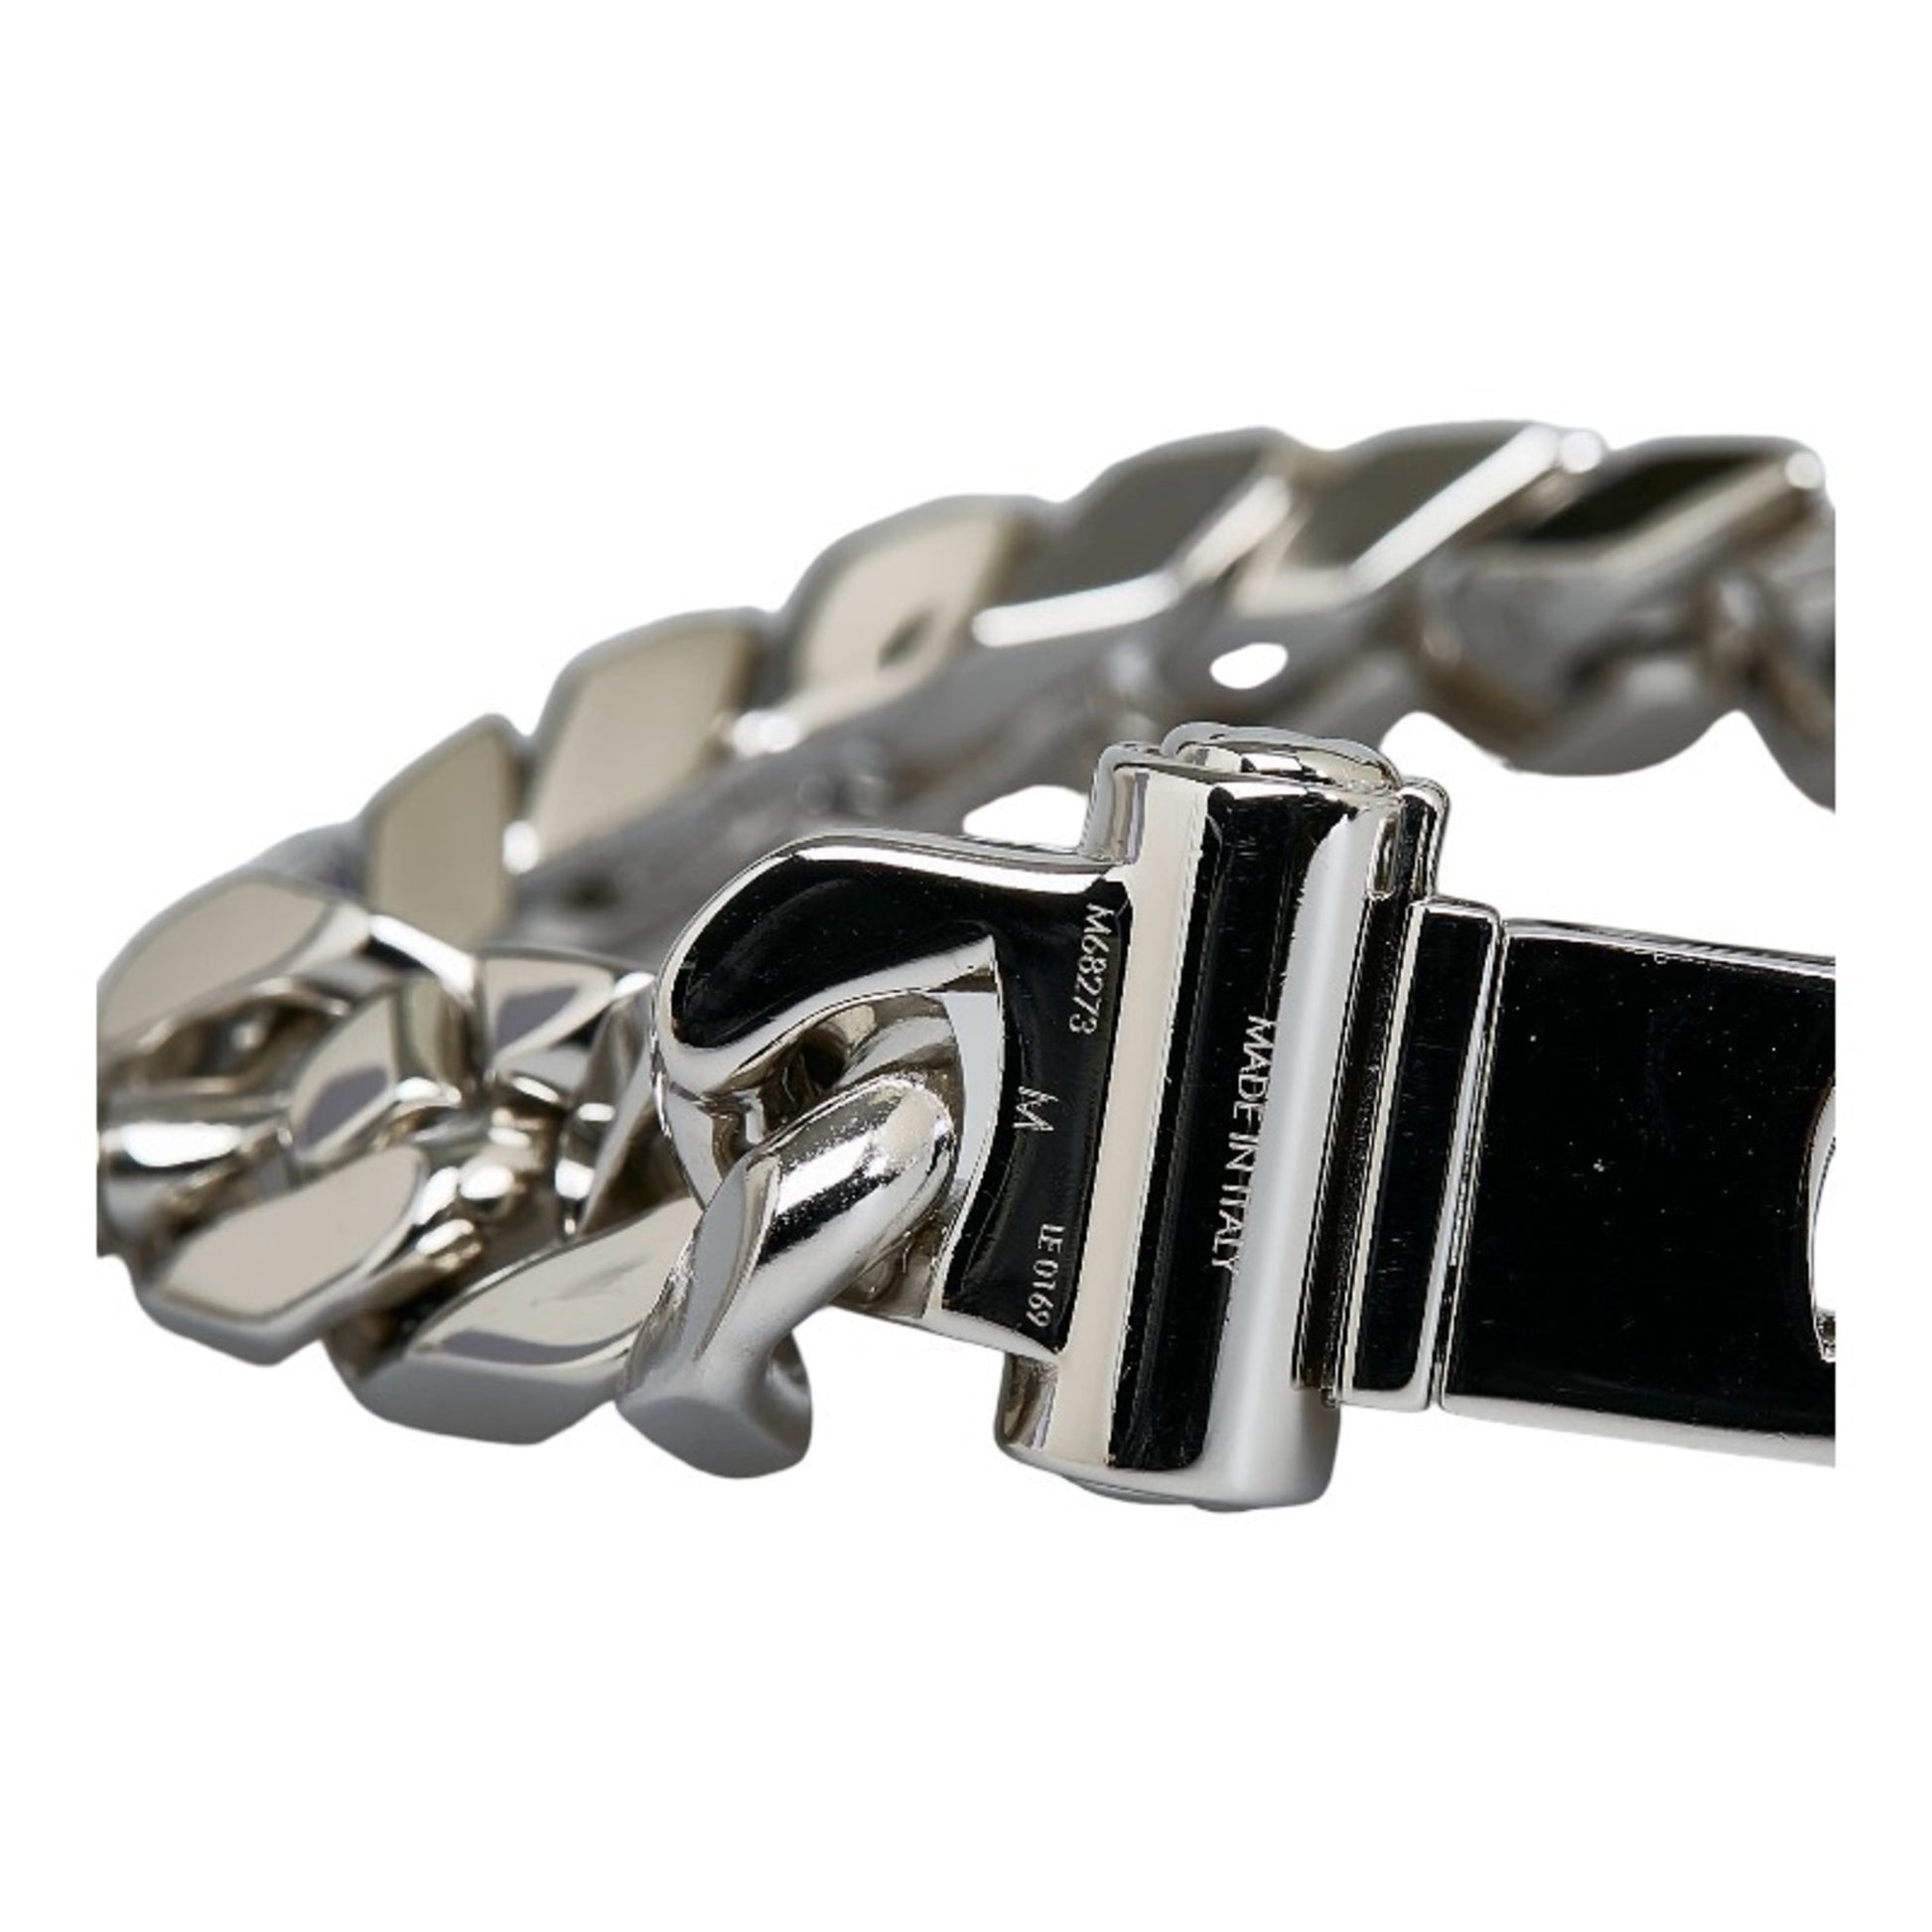 LOUIS VUITTON Bracelet LV Chain Links Monogram M68274 Silver Metal